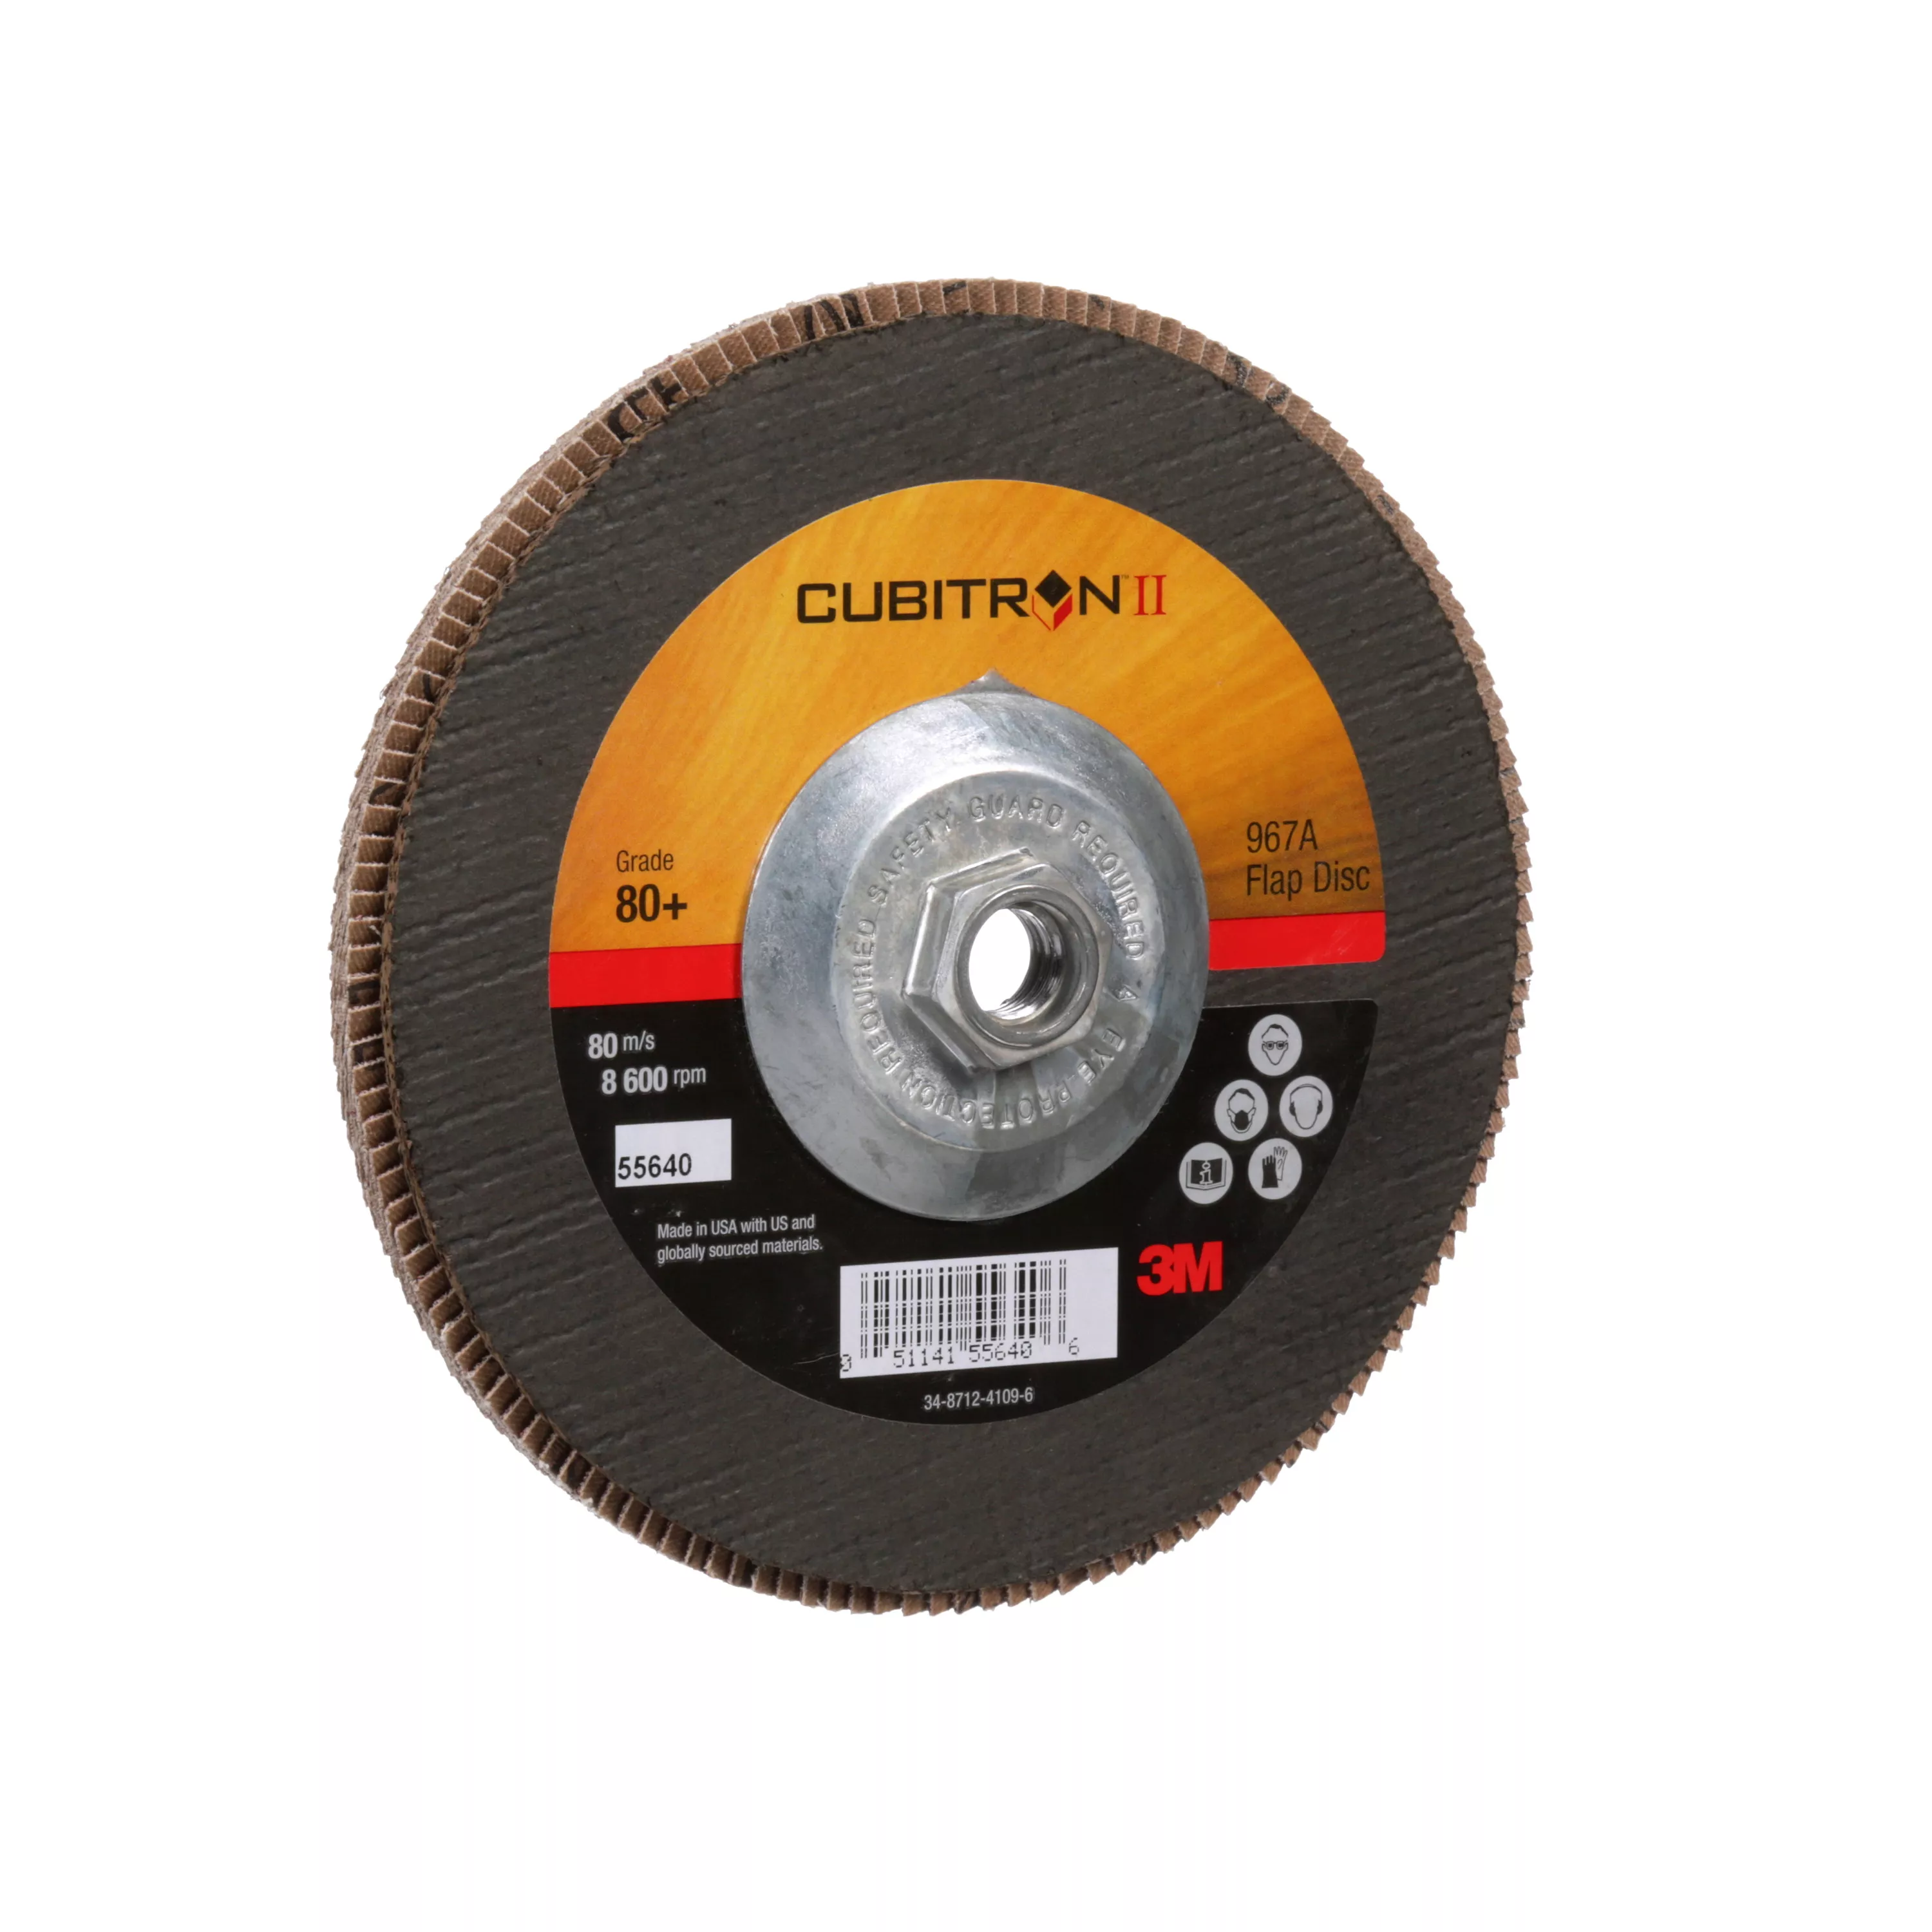 SKU 7010327063 | 3M™ Cubitron™ II Flap Disc 967A